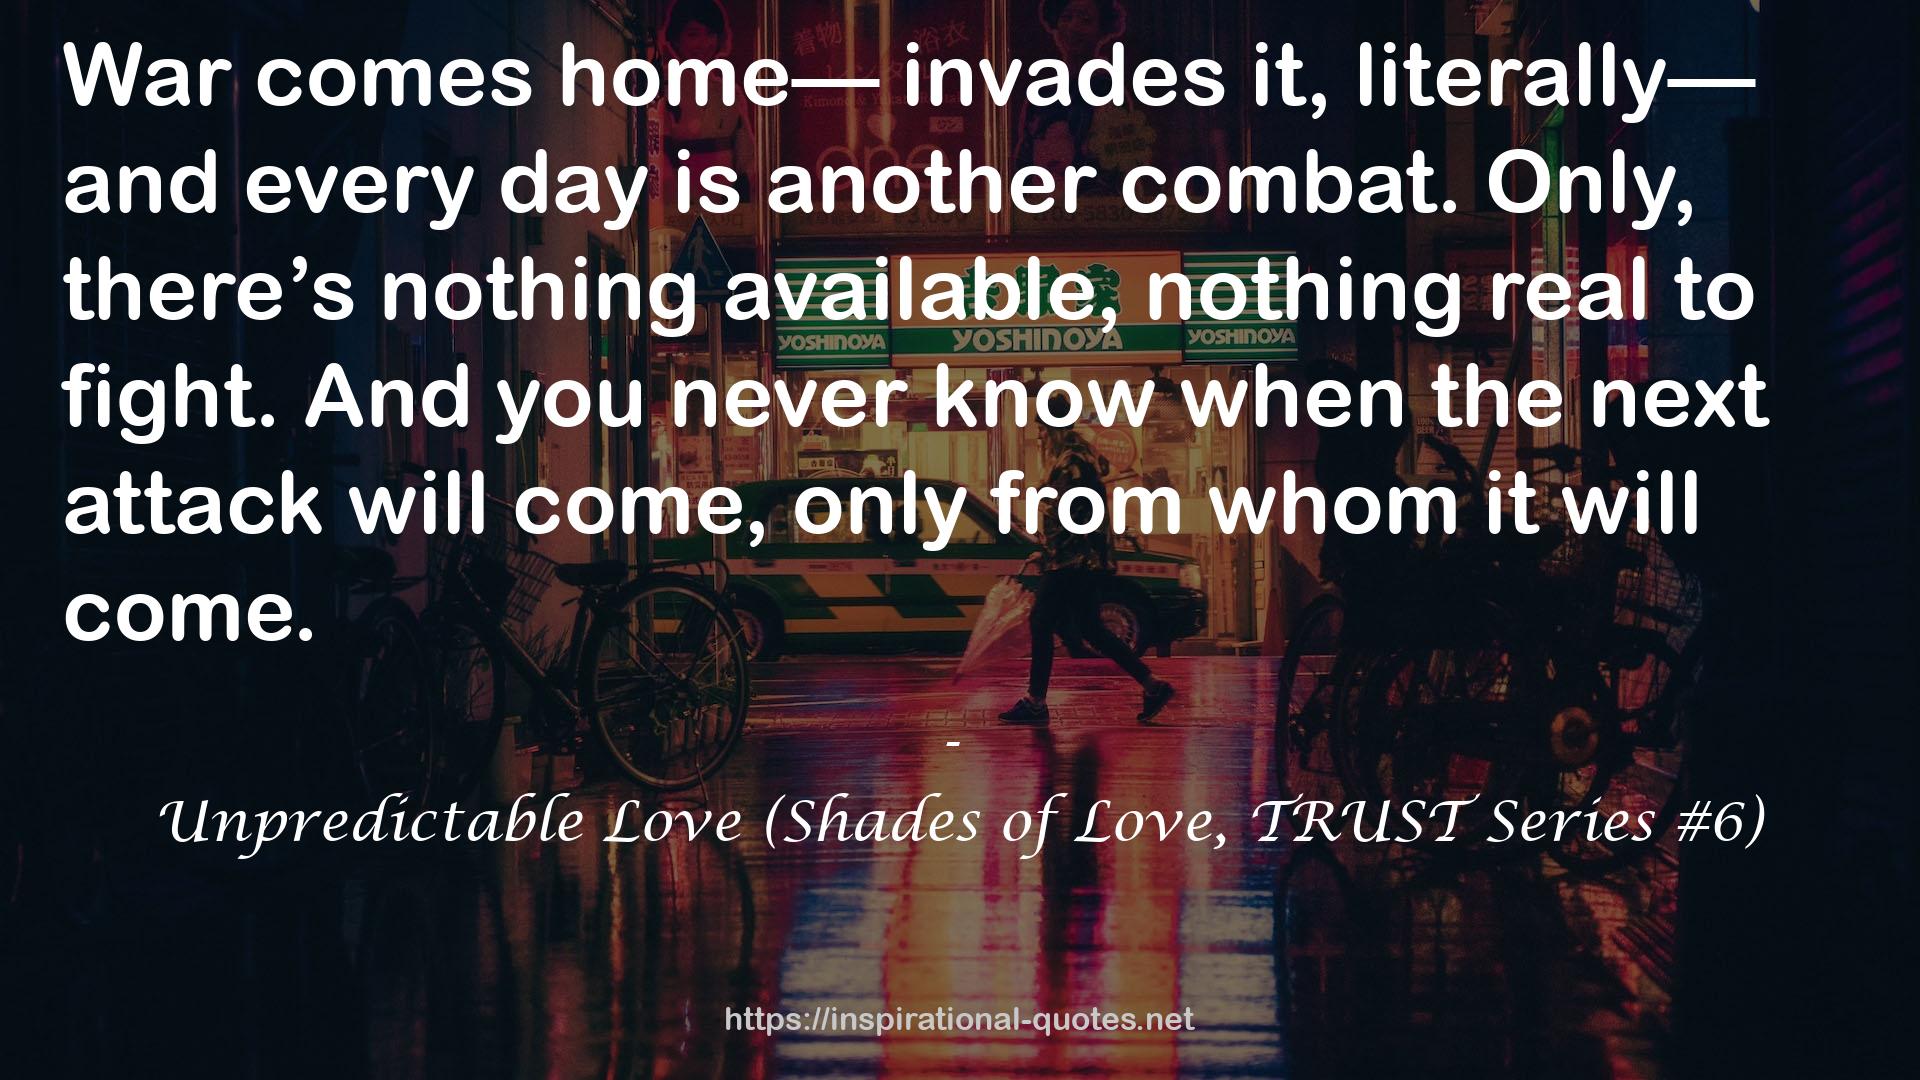 Unpredictable Love (Shades of Love, TRUST Series #6) QUOTES